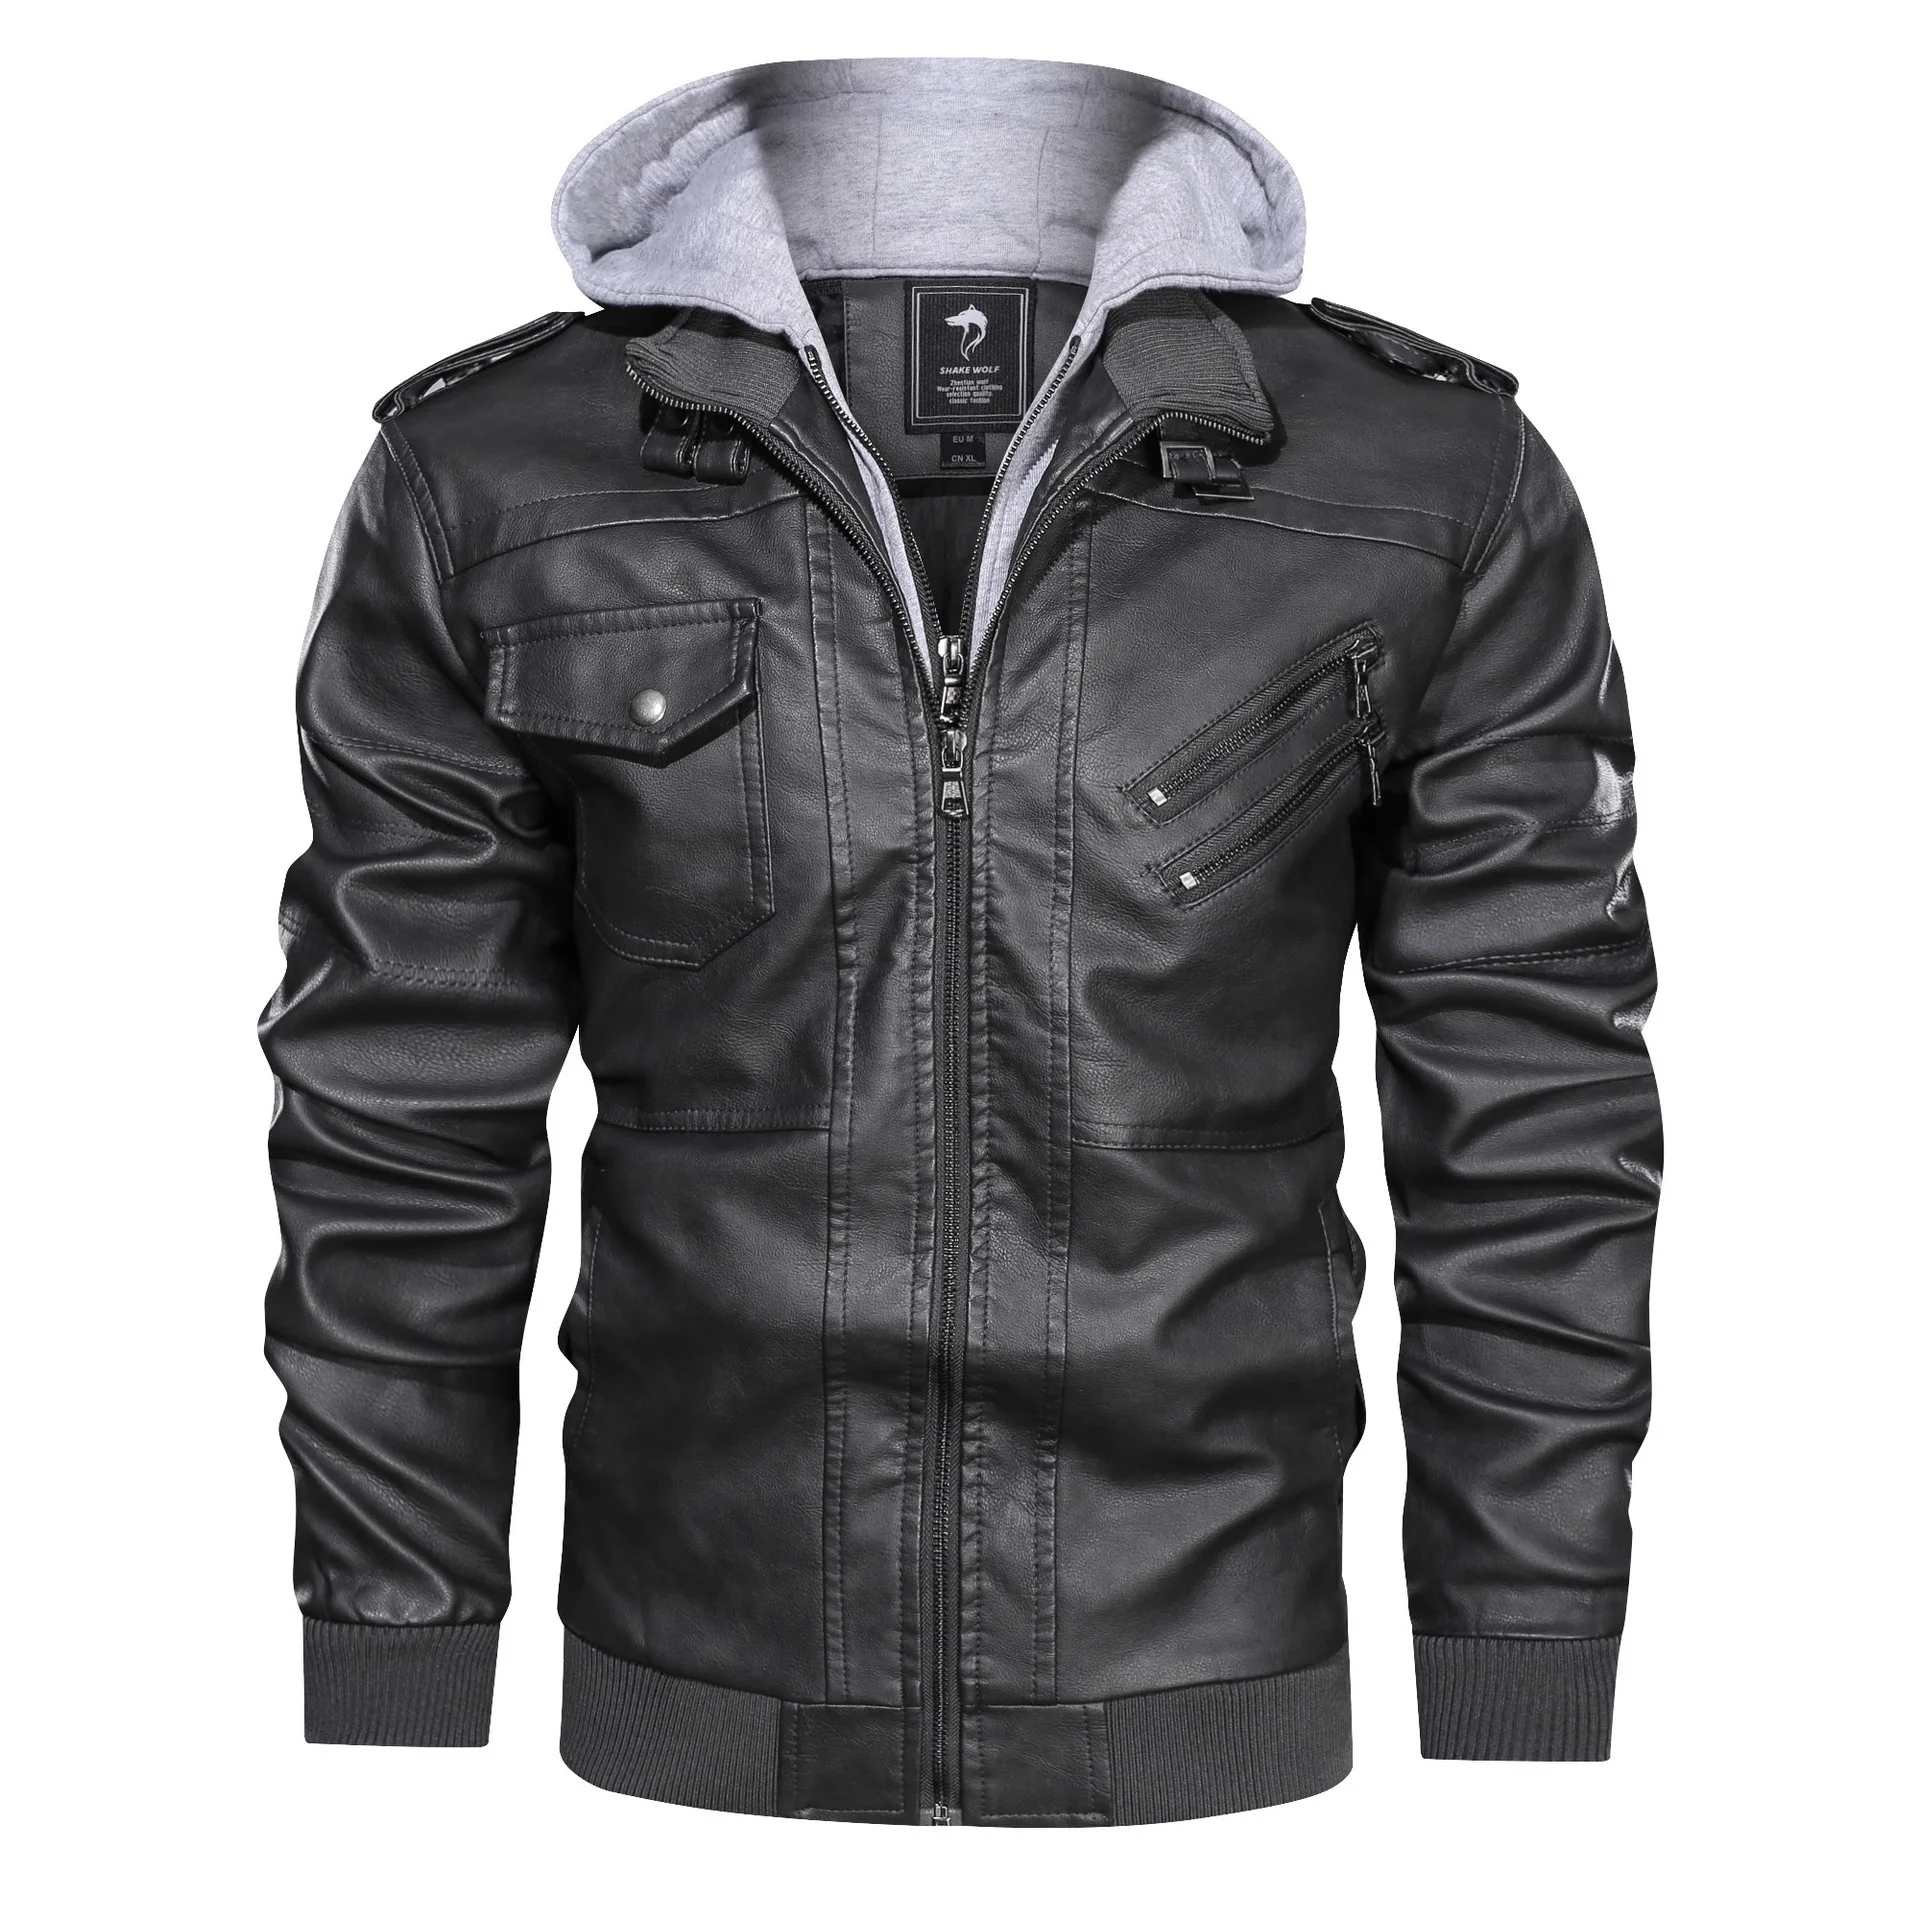 leather field jacket New Men's Liner PU Leather Jackets Coats with Hood Autumn spring Casual Motorcycle Jacket For Men Windbreaker Biker Jackets 5XL leather blazer men